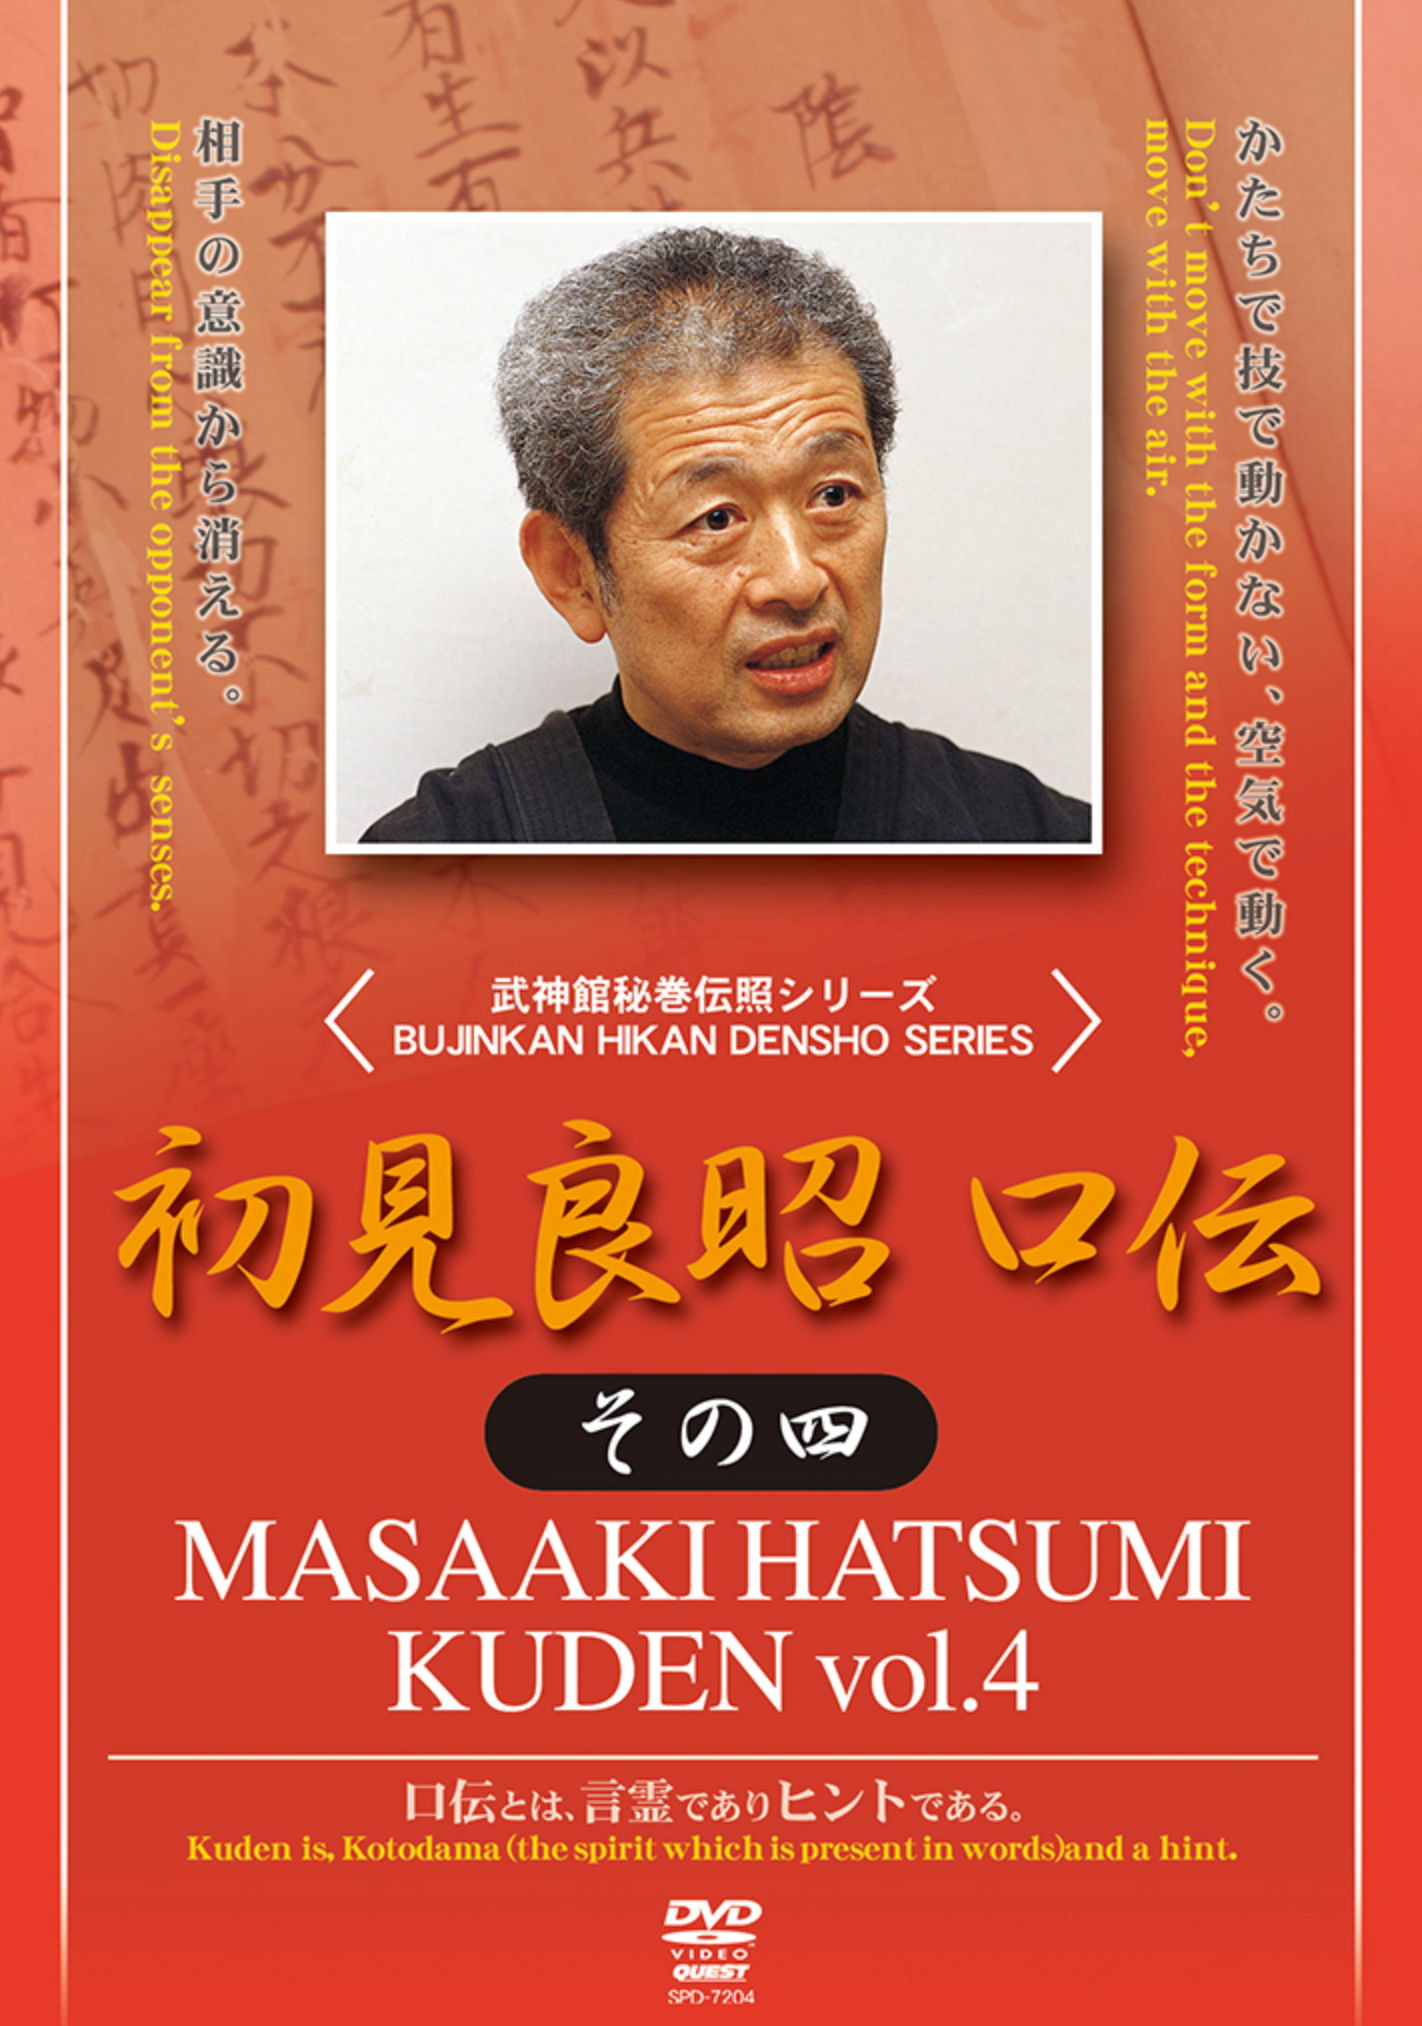 Kuden Vol 4 DVD with Masaaki Hatsumi - Budovideos Inc